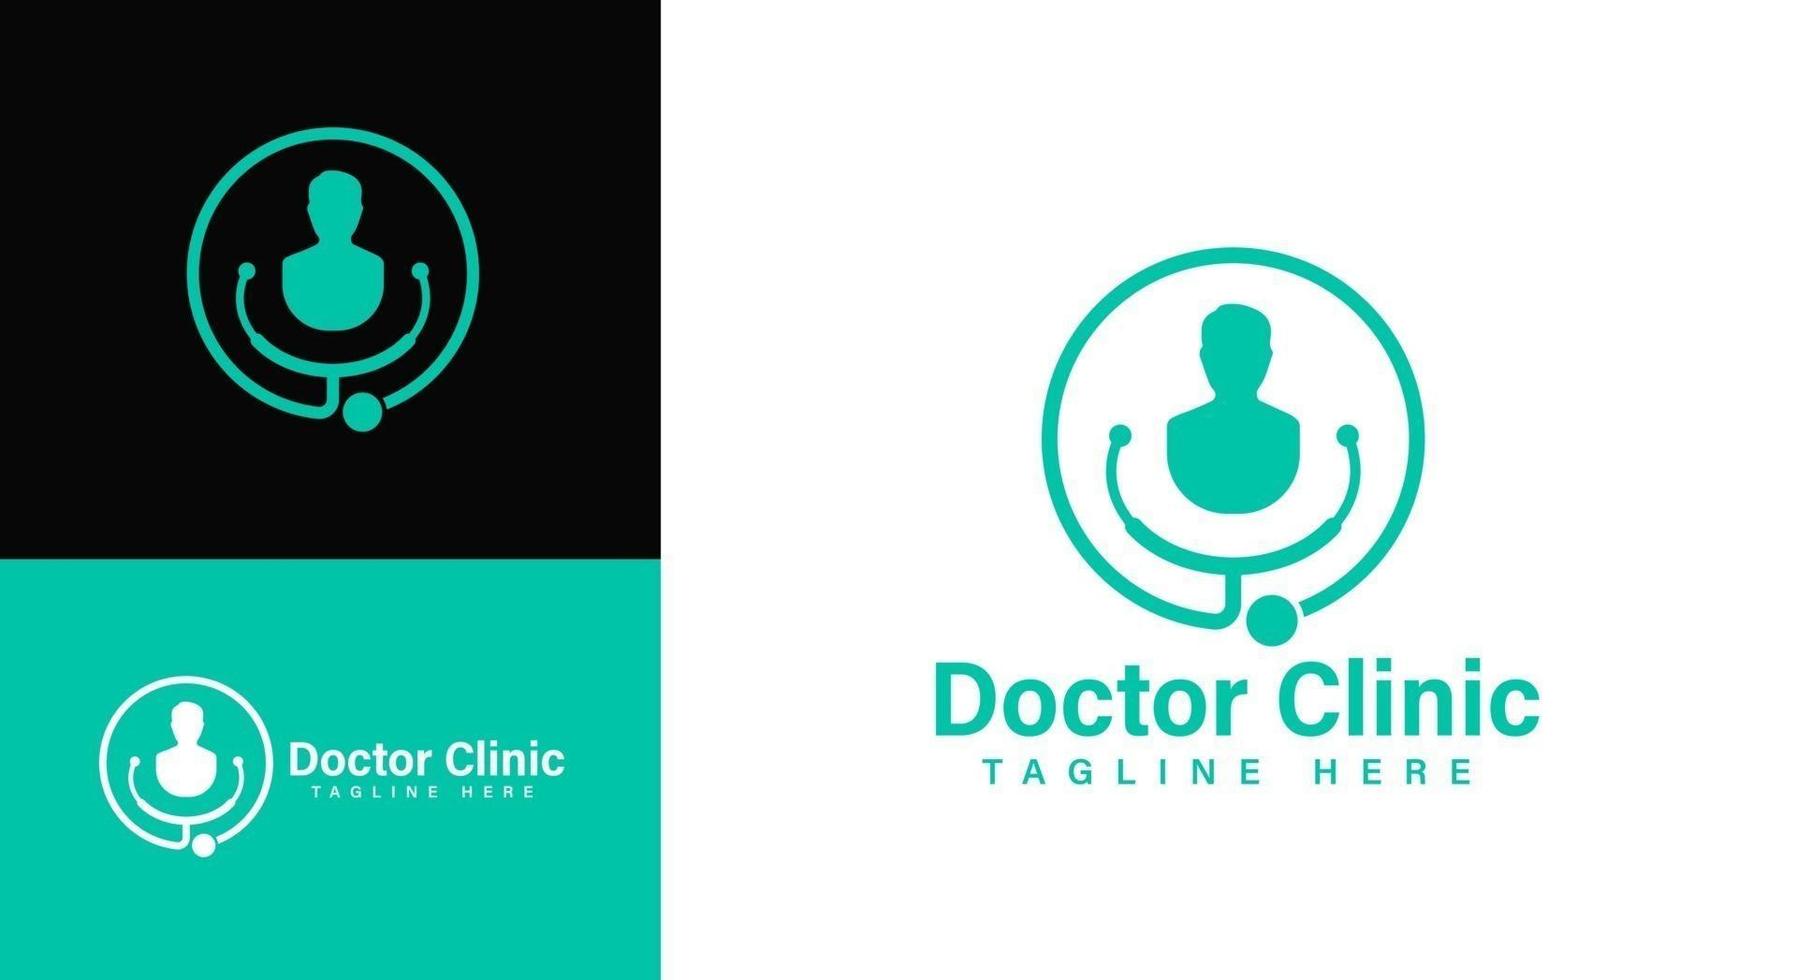 Doctor Clinic, Medical, Hospital and Health Company Identity Logo Template. vector logo illustration